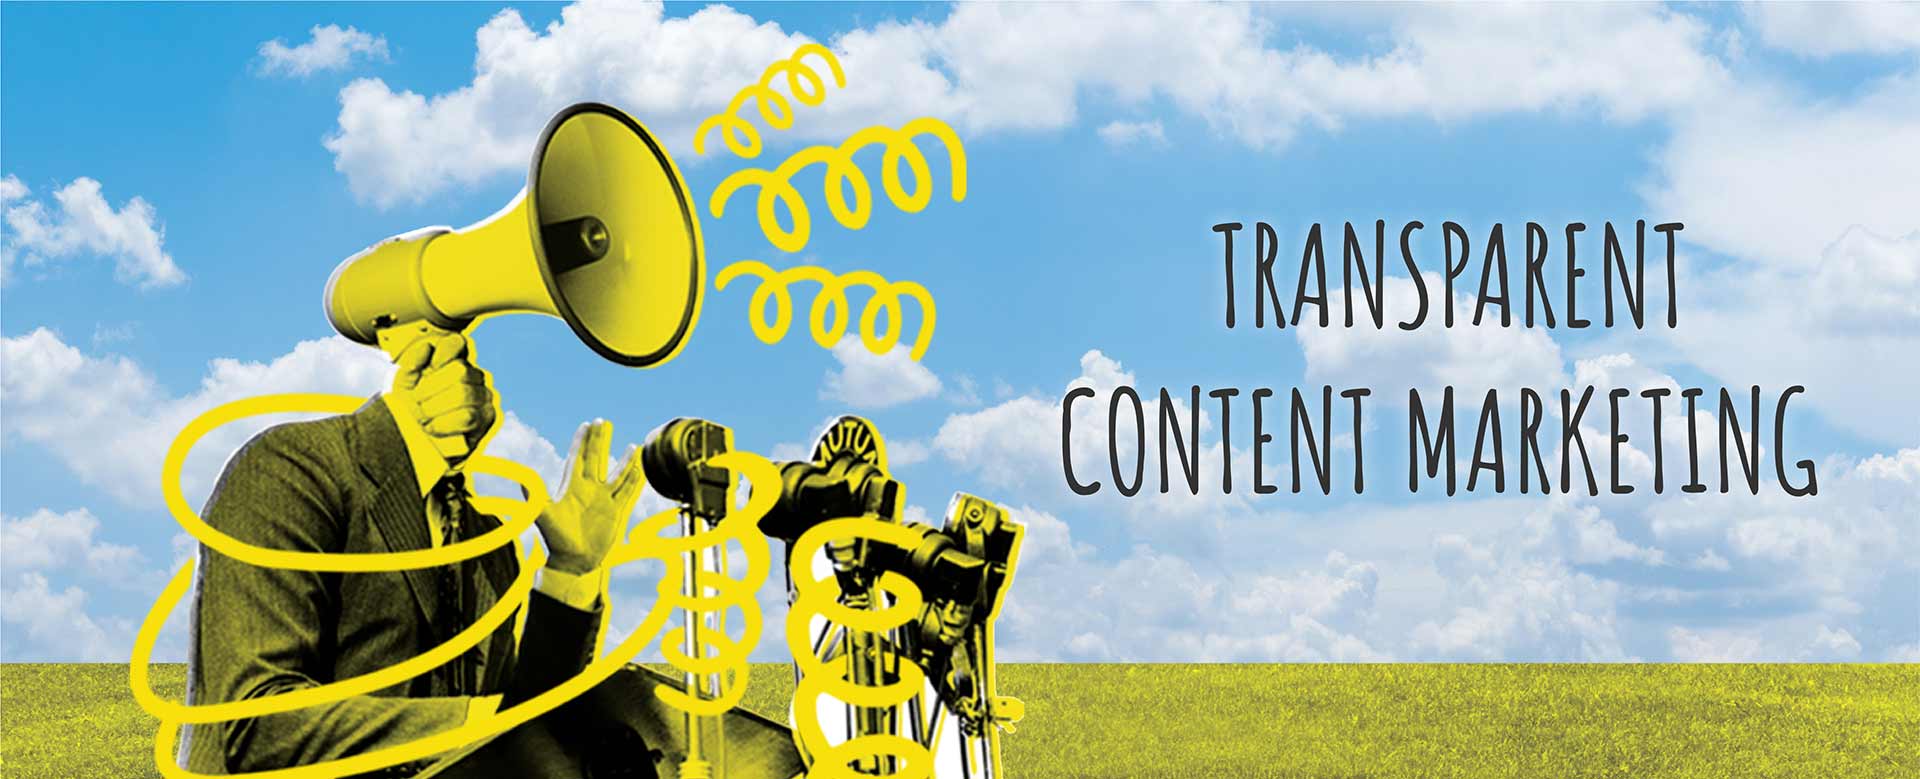 Transparent Content Marketing